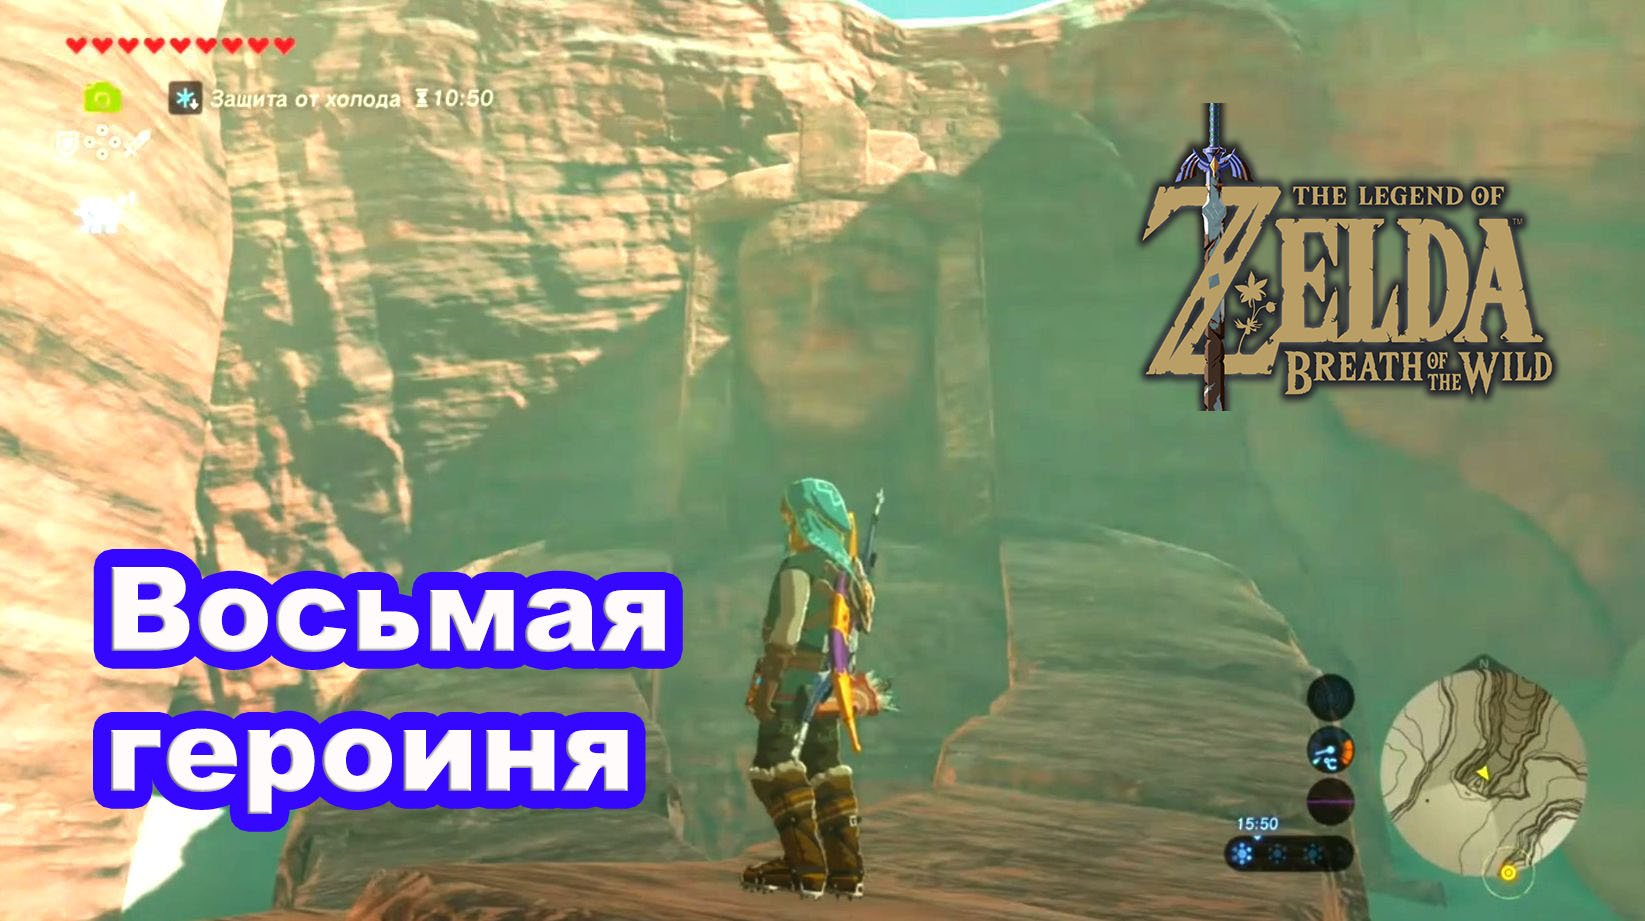 Восьмая героиня. The Legend Of Zelda: Breath Of The Wild.